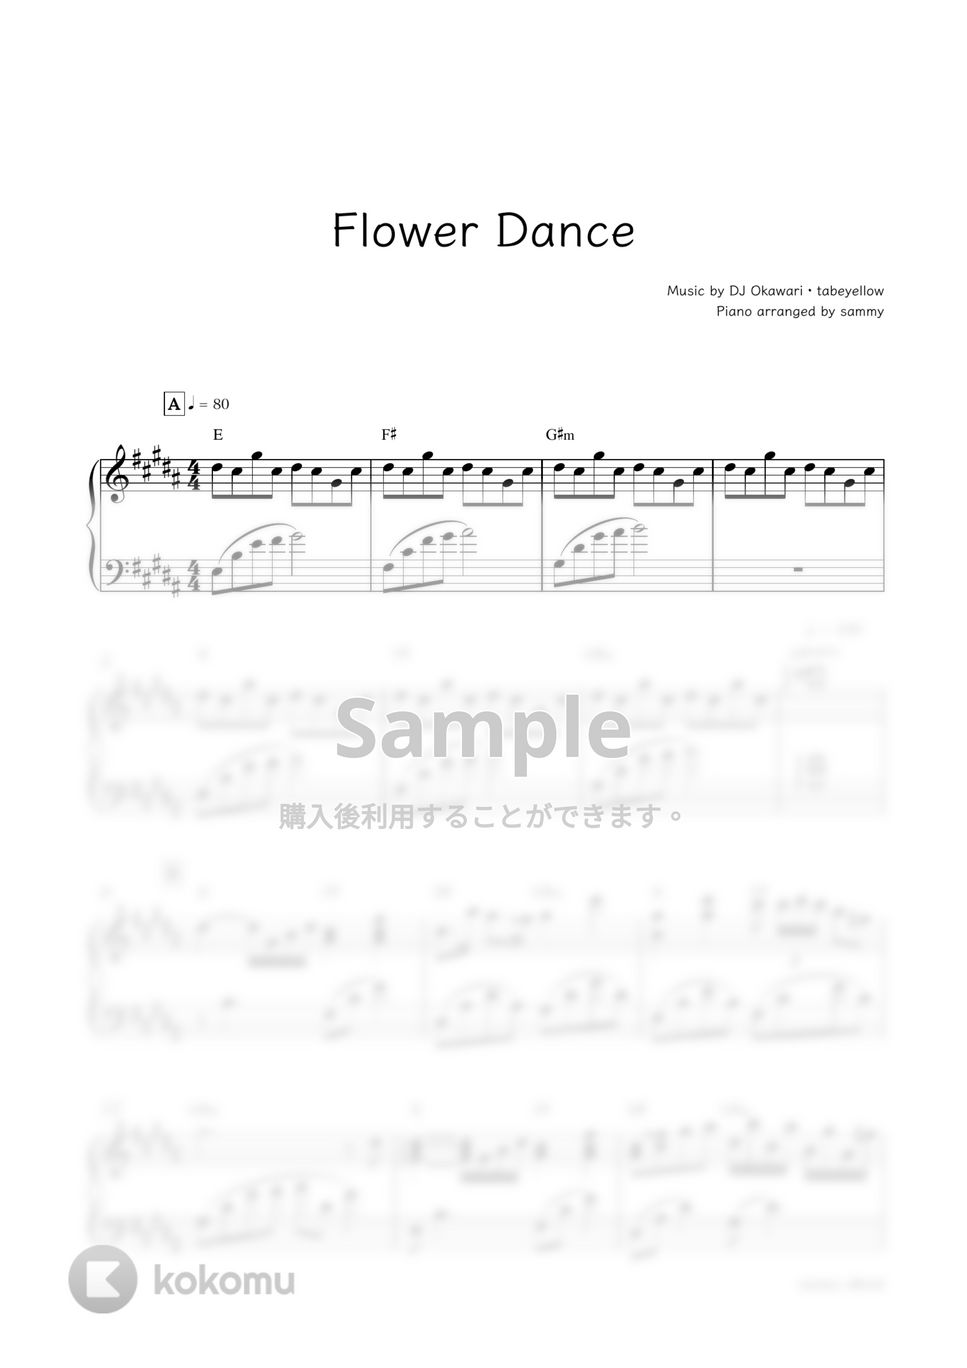 DJ Okawari - Flower Dance by sammy